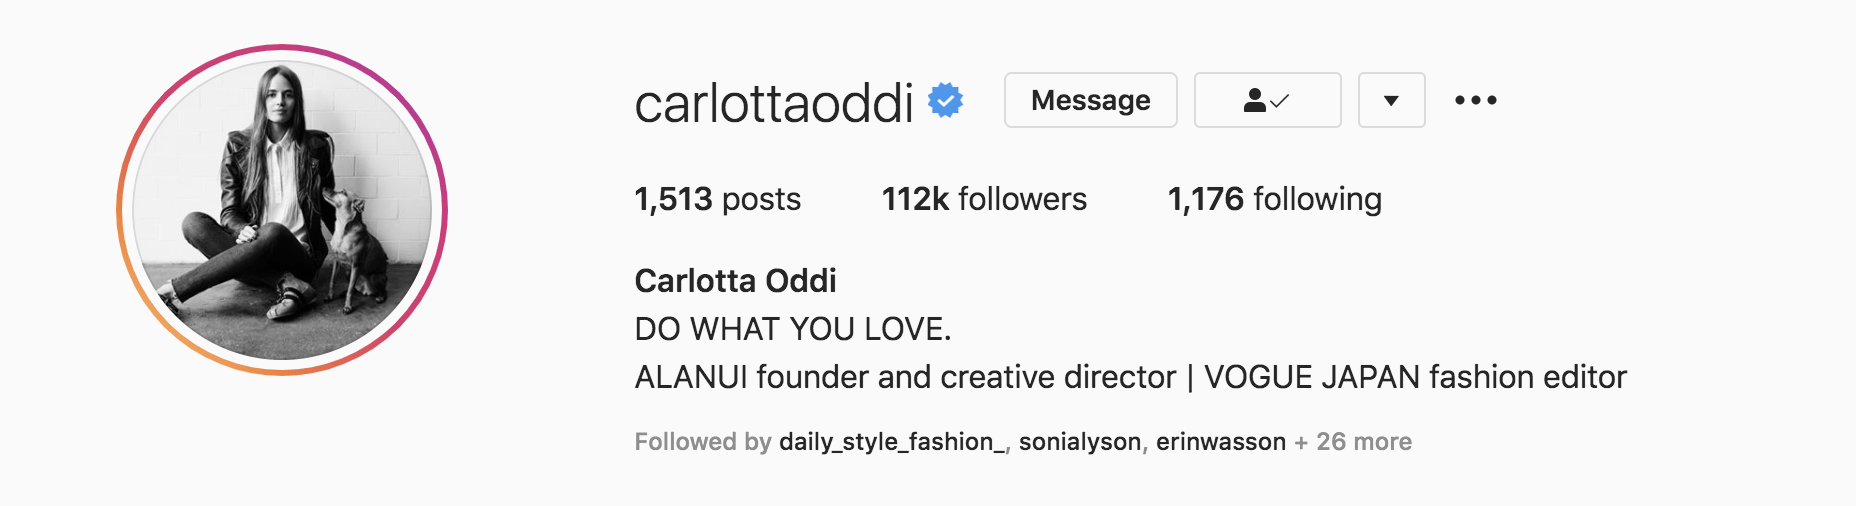 Top Fashion Influencers - Carlotta Oddi